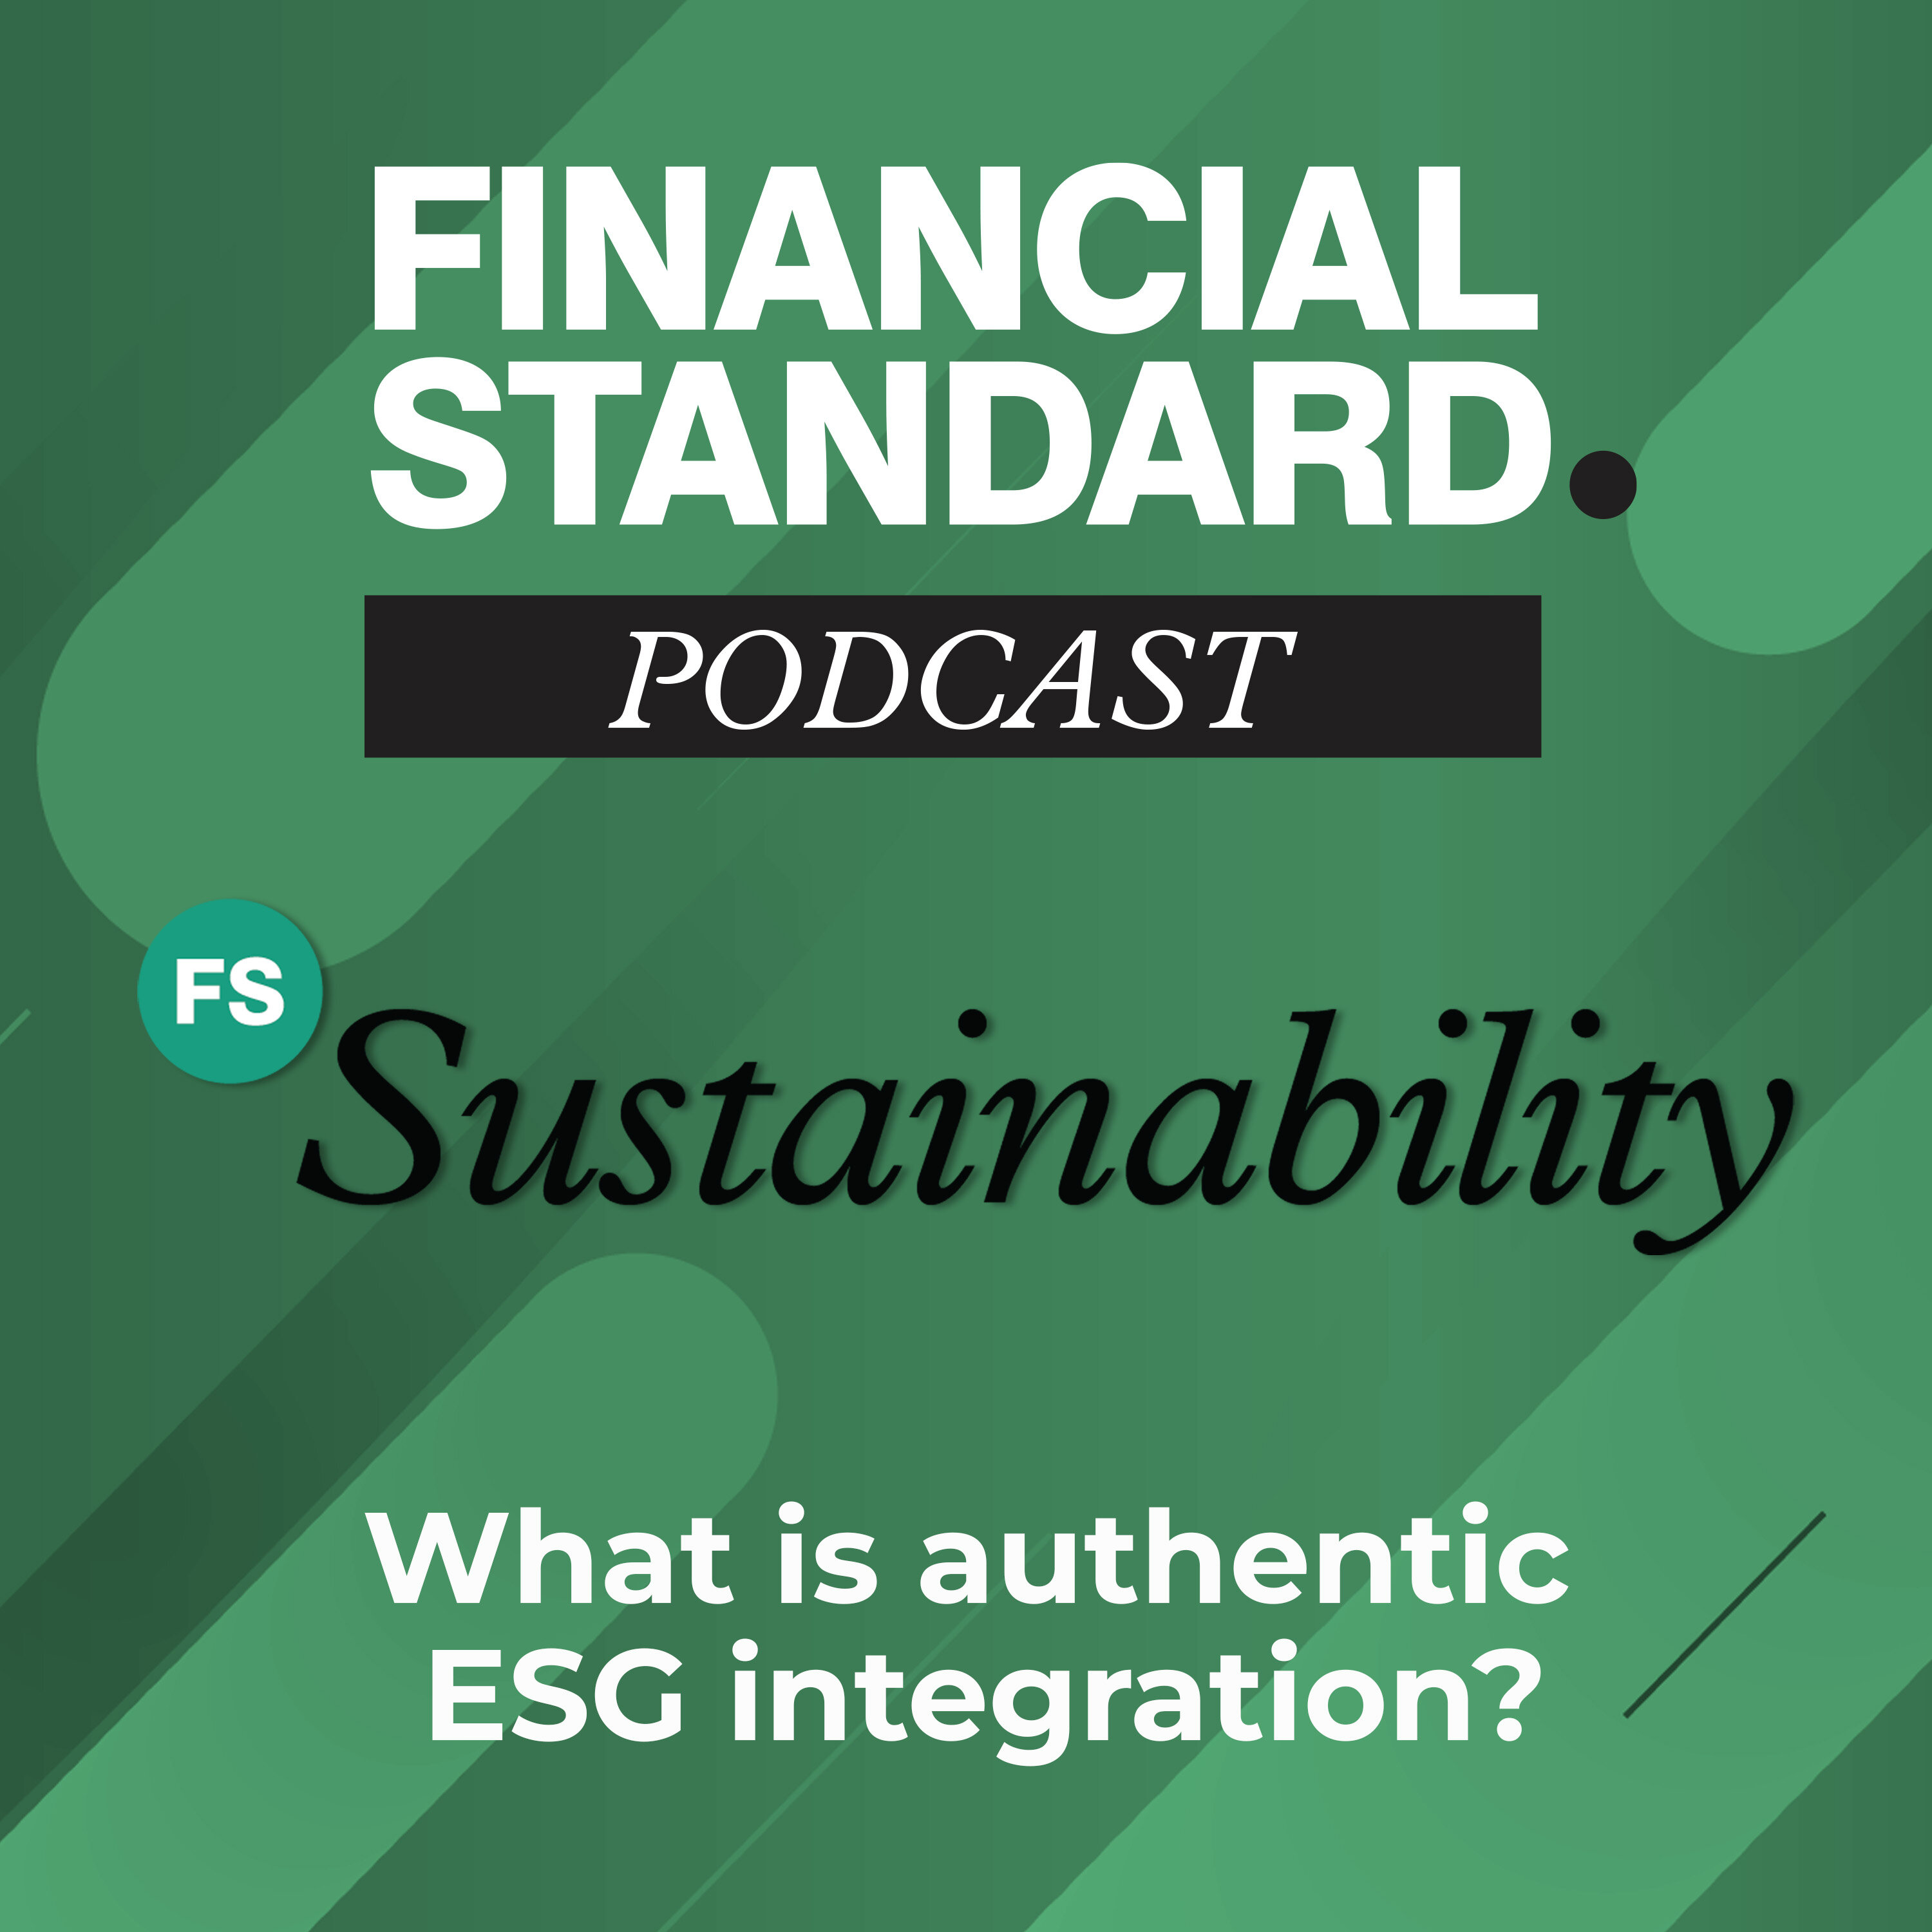 Artwork for podcast Financial Standard Podcast